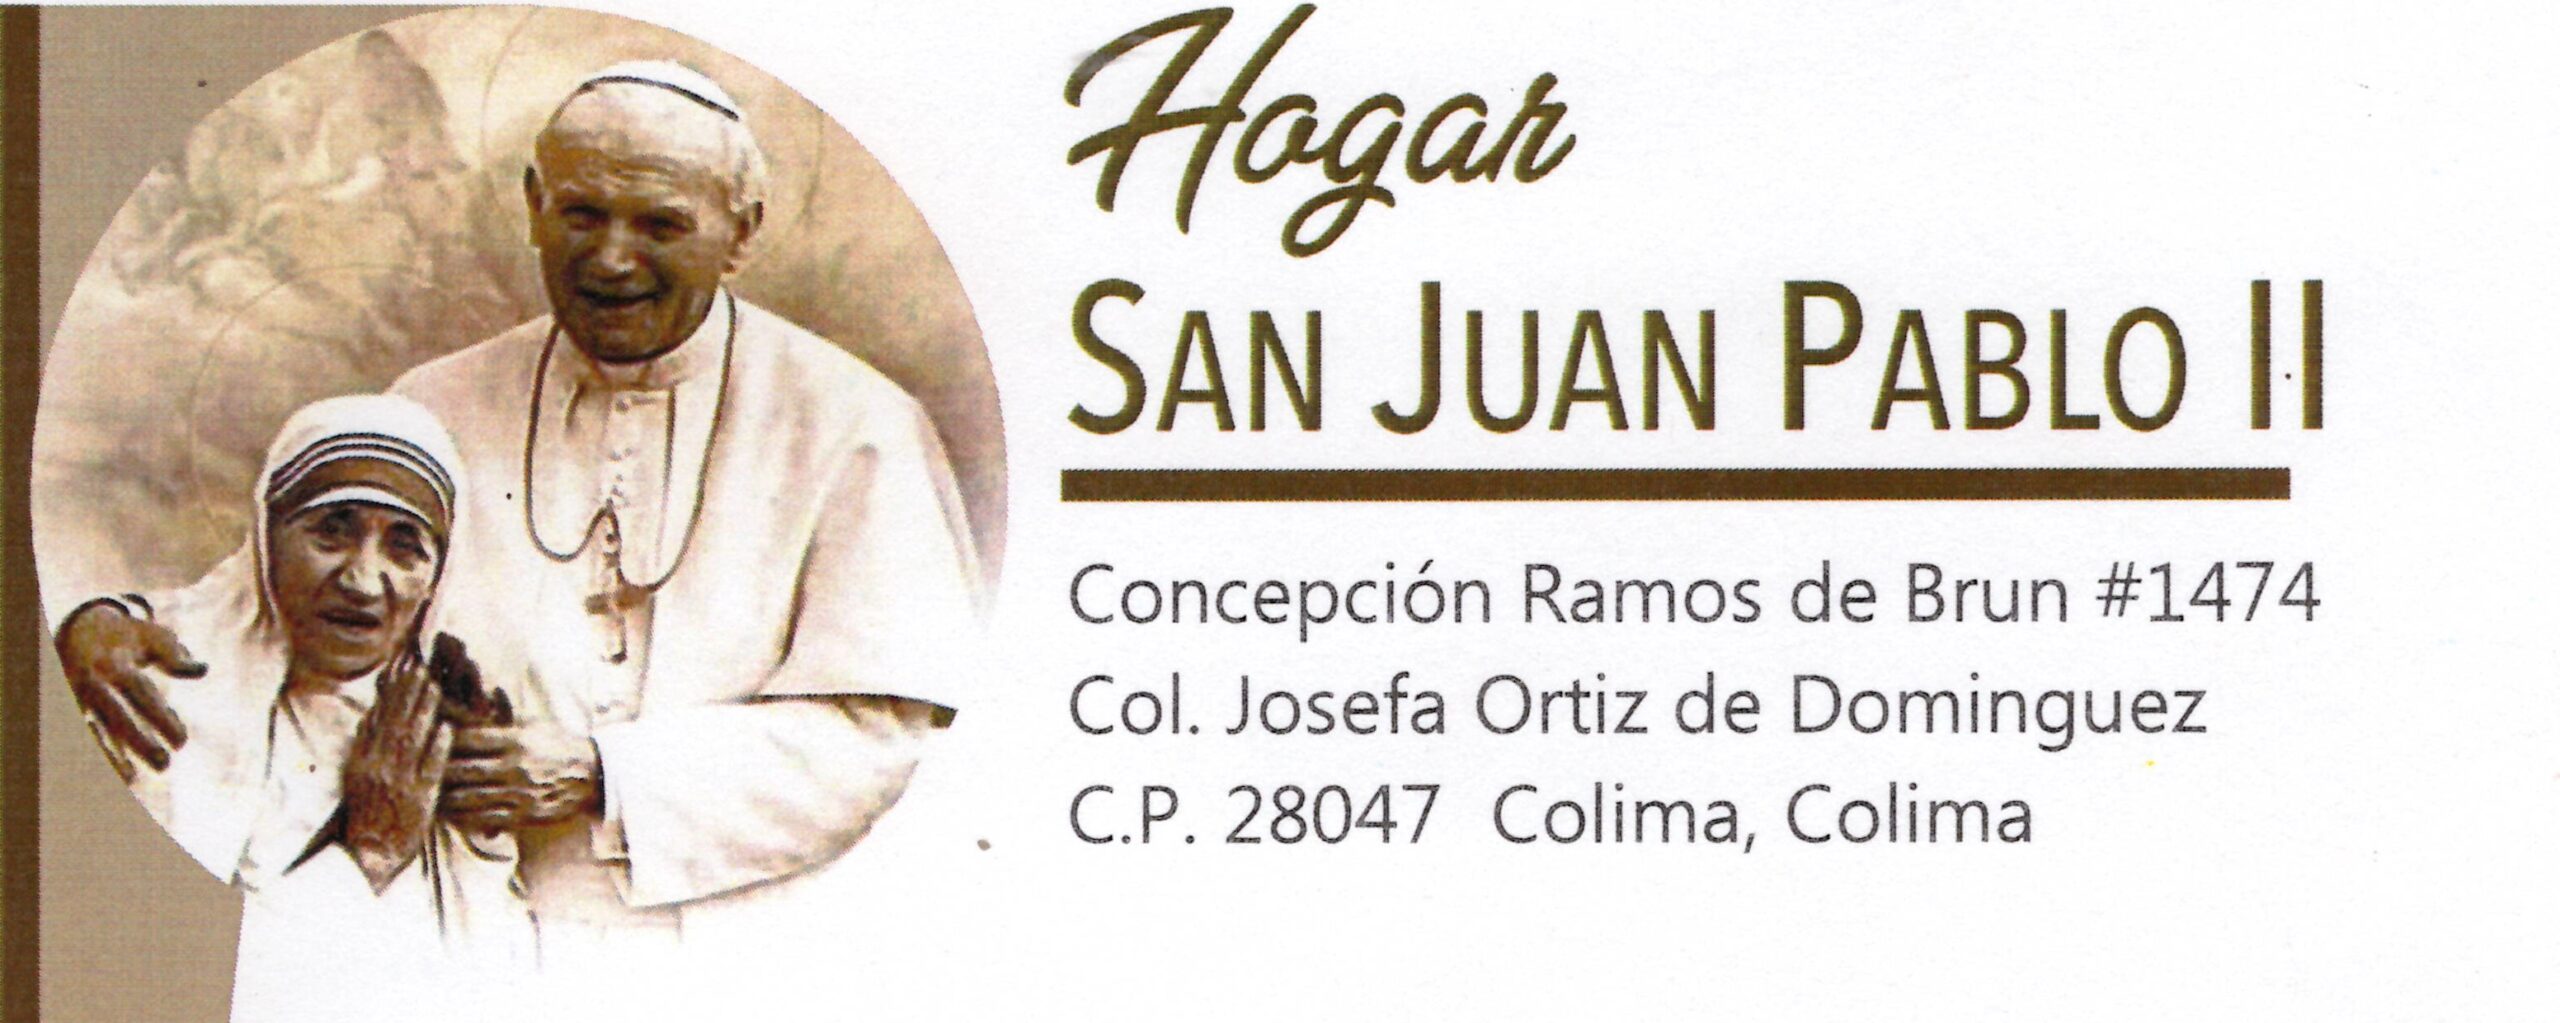 Hogar San Juan Pablo II, I.A.P.